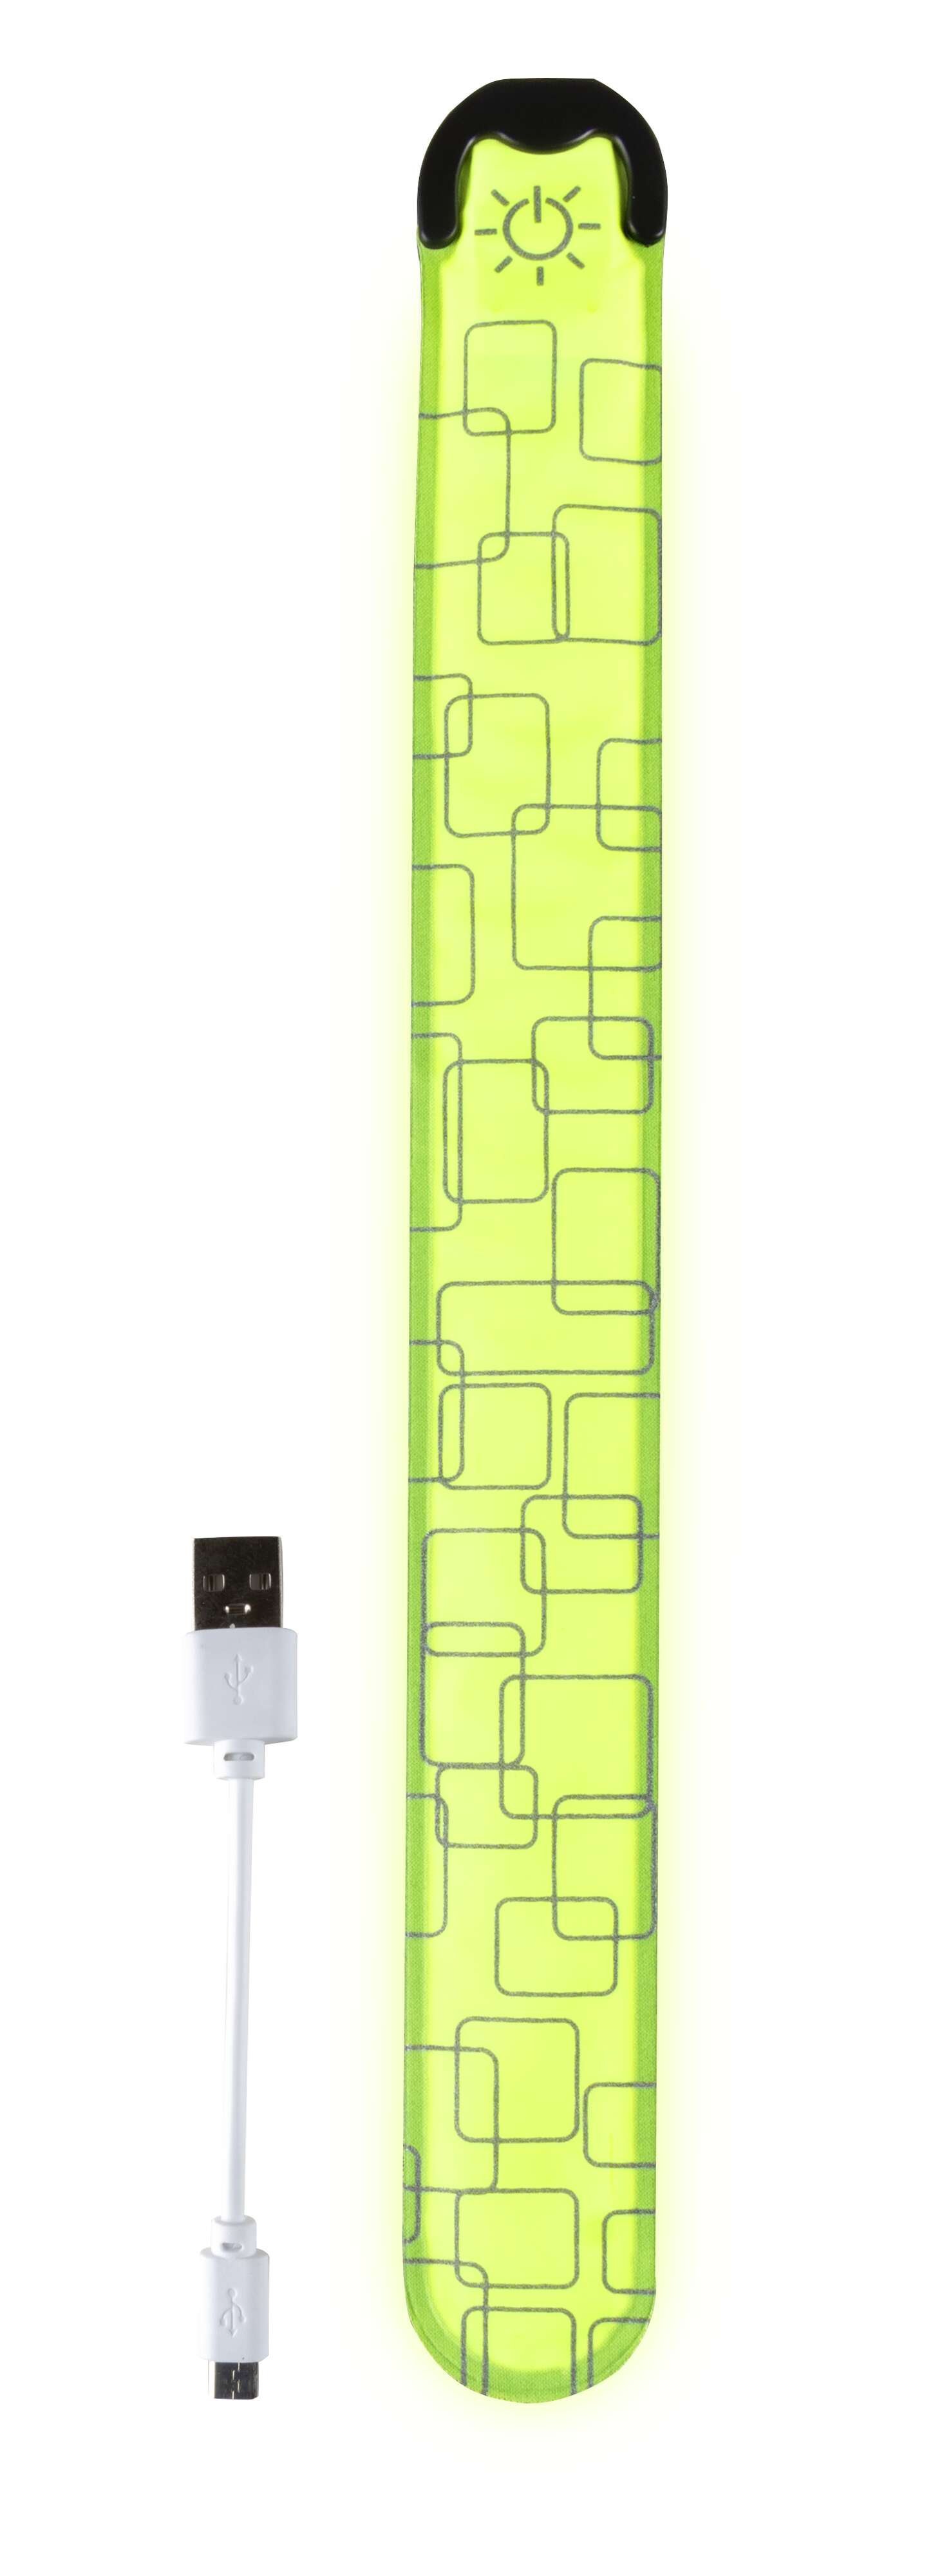 LED slap wrap, lichtgevende slap wrap met USB oplaadmogelijkheid 36x3,5 cm geel